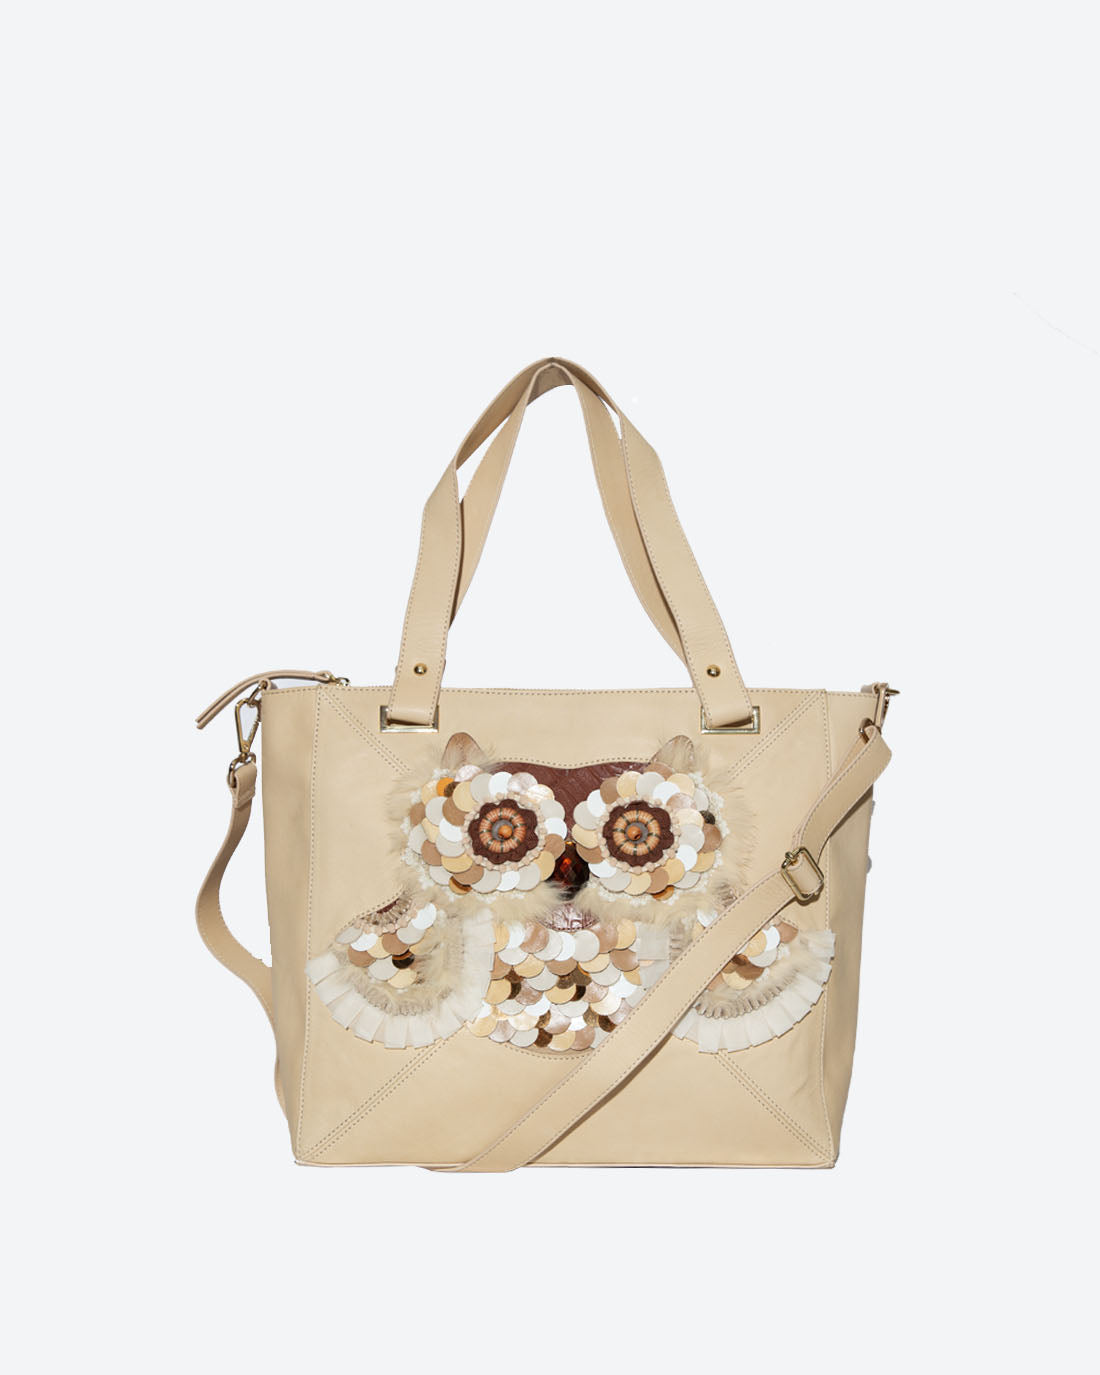 OWL: Applique Tote Bag